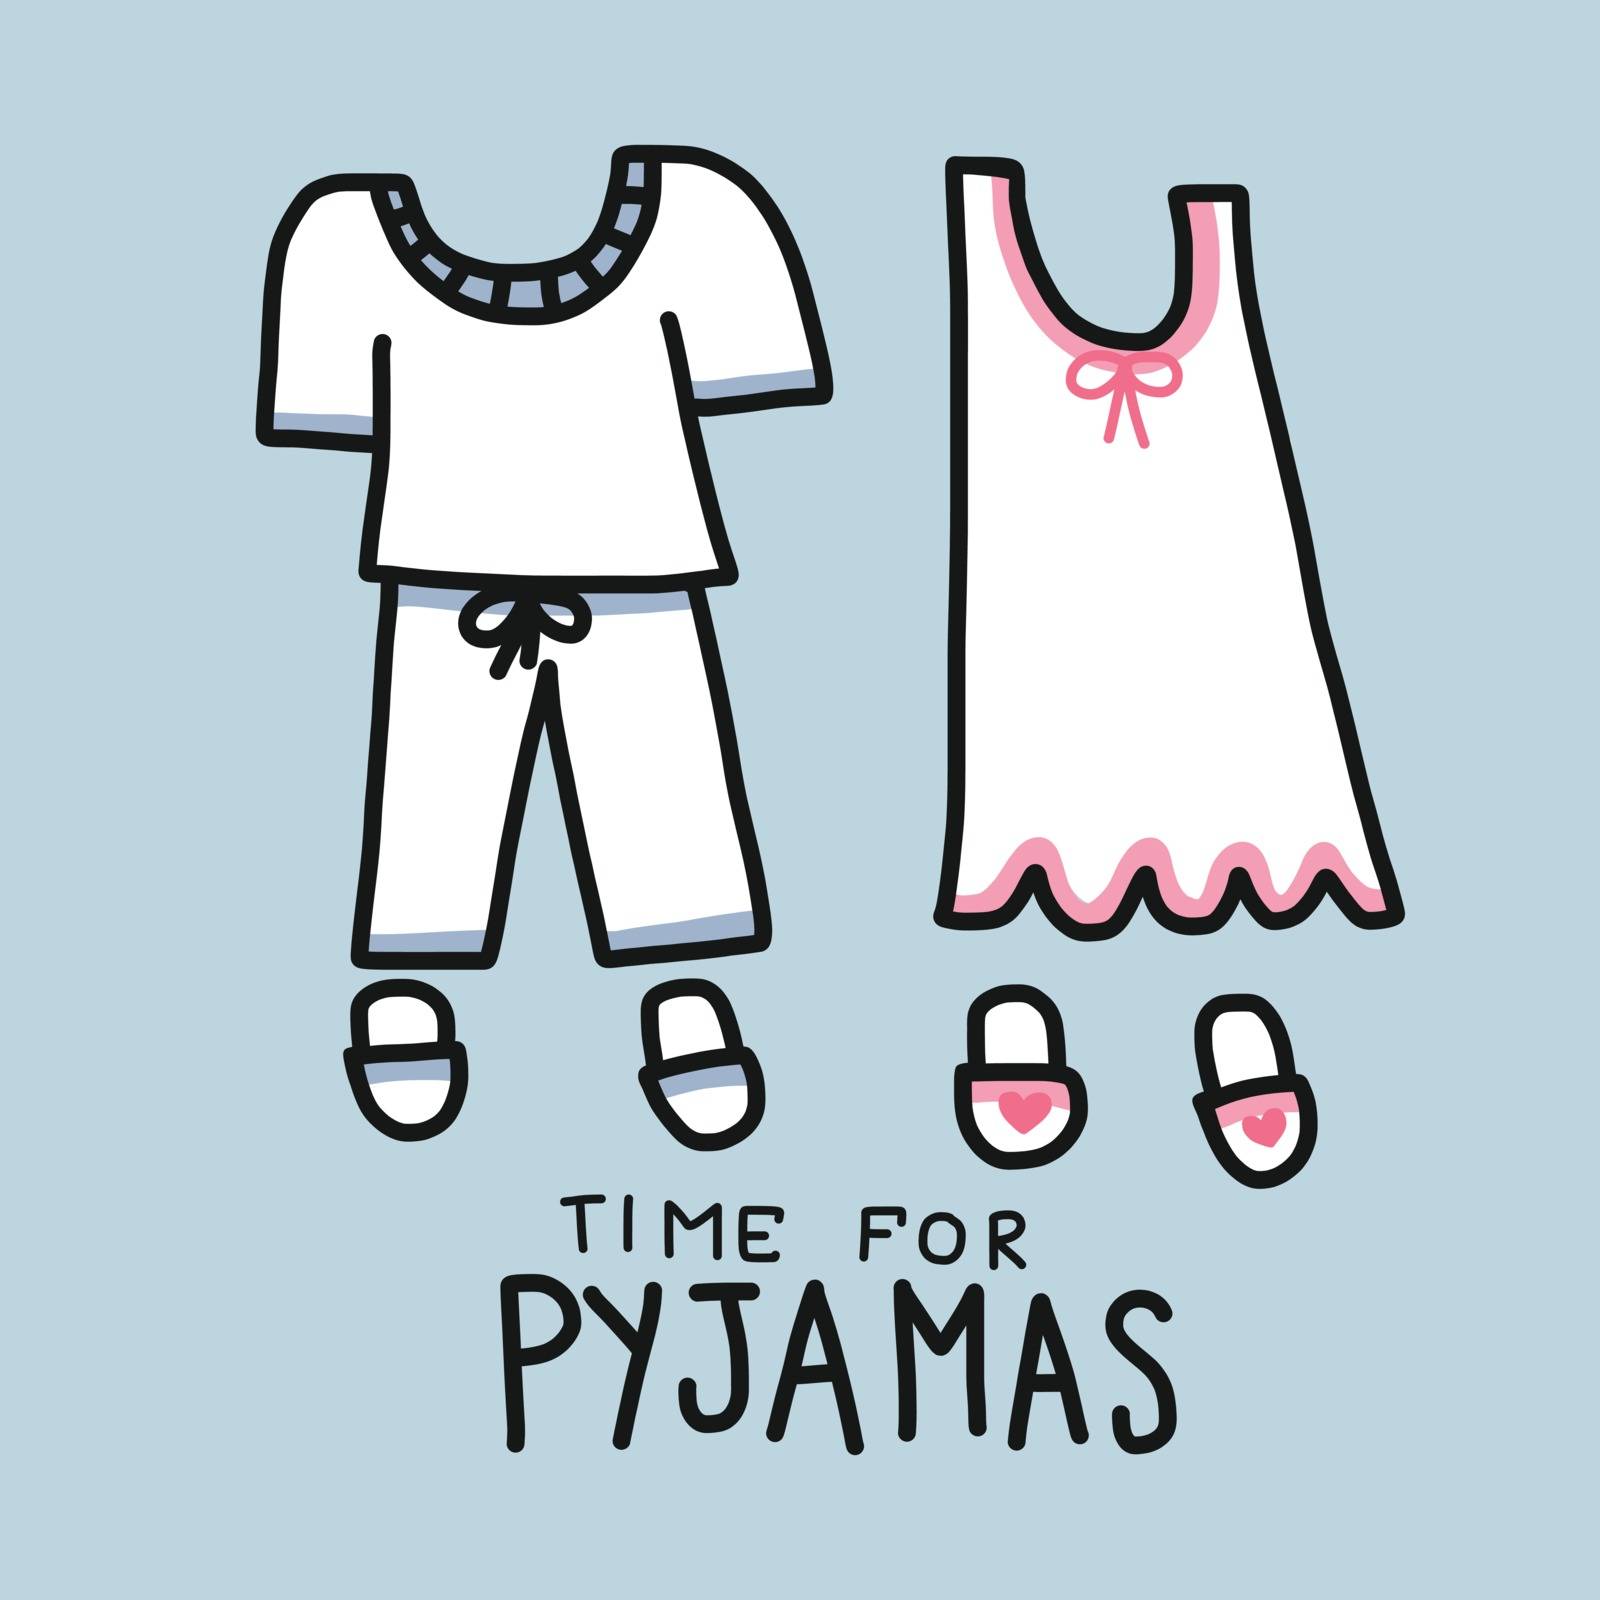 Time for Pyjamas (Pajamas) word and cartoon vector illustration